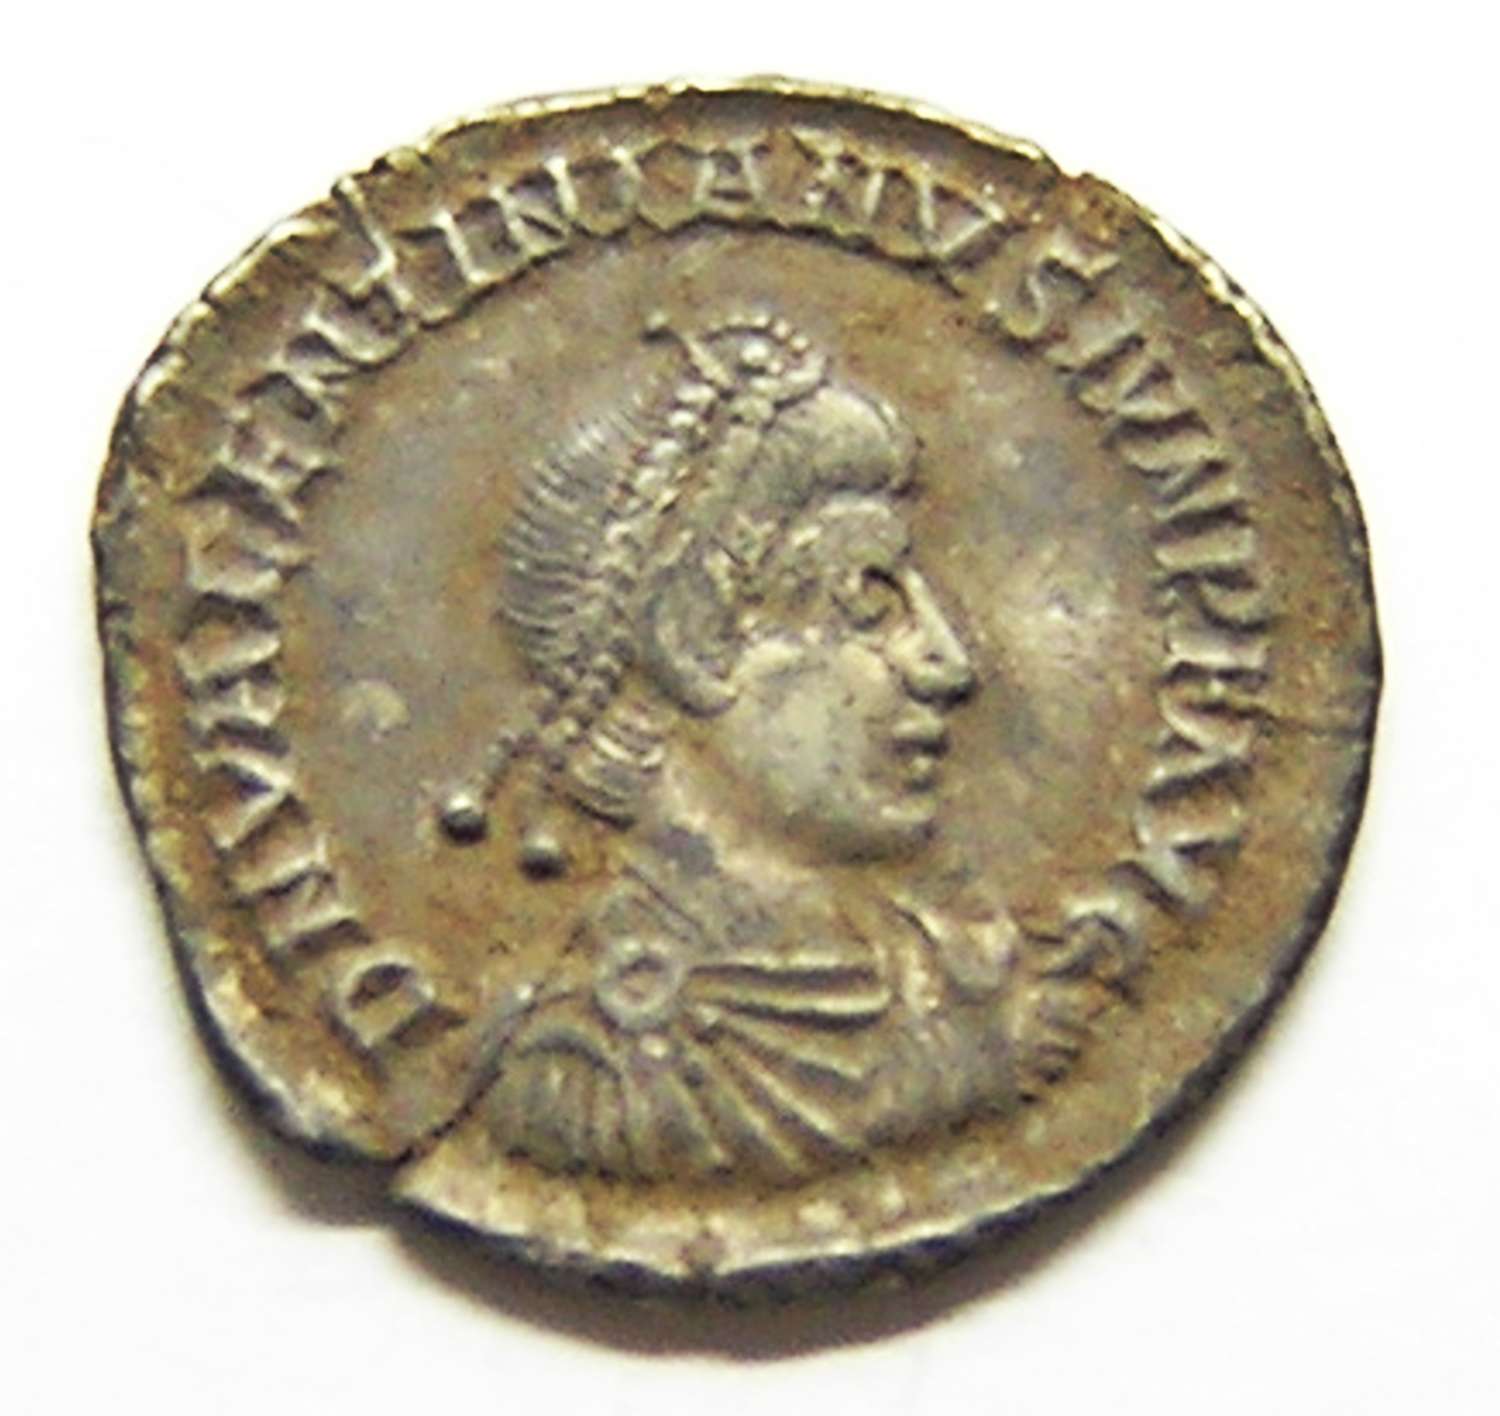 Roman silver Siliqua of Emperor Valentinian II Ex. Thruxton Hoard